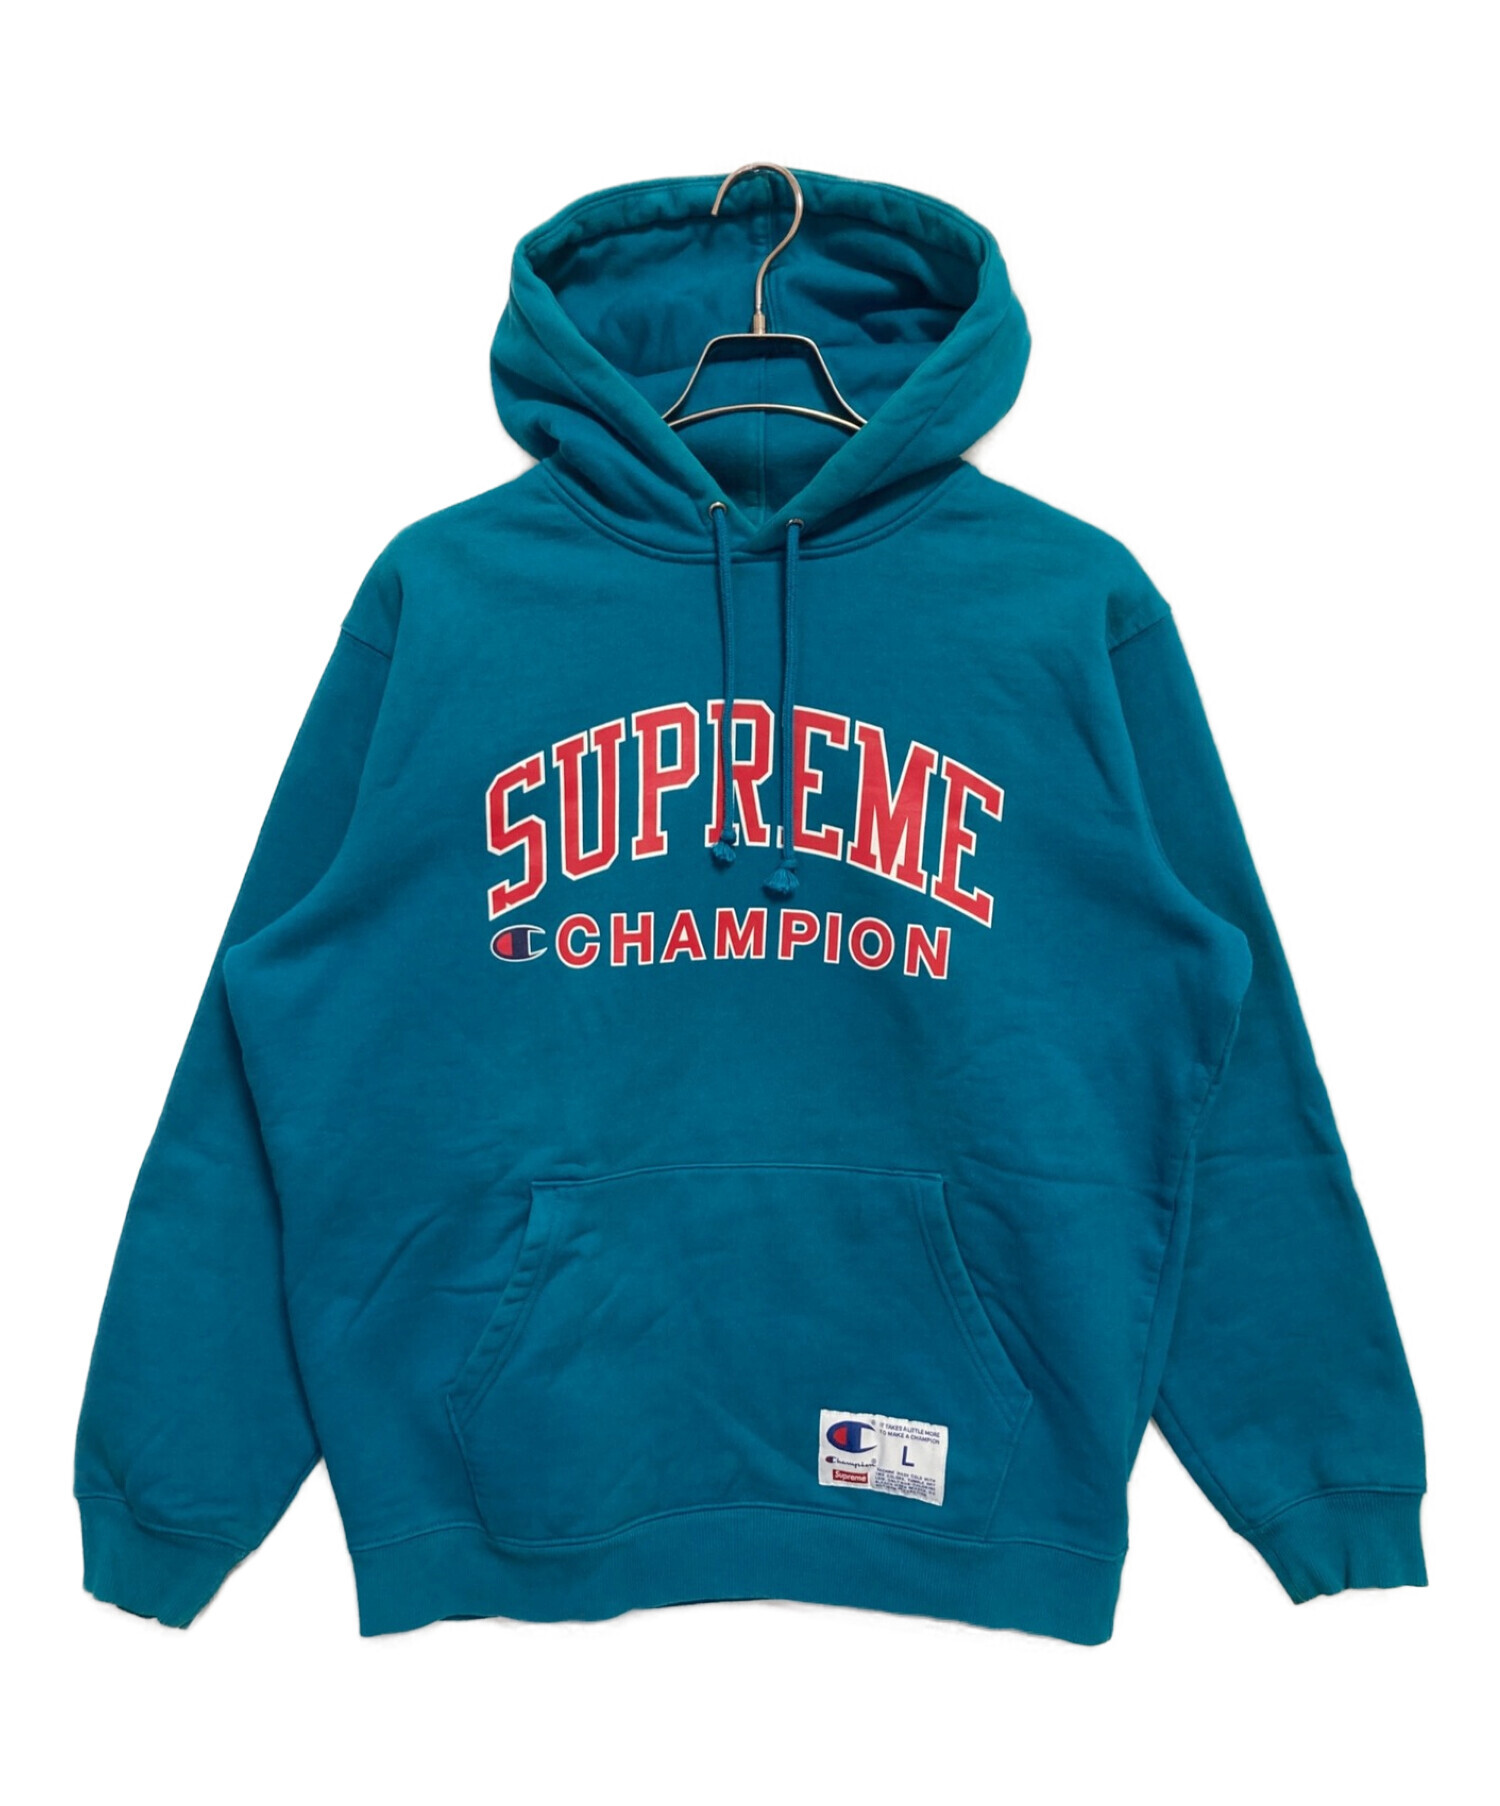 Supreme (シュプリーム) Champion (チャンピオン) コラボフーディー ブルー サイズ:L